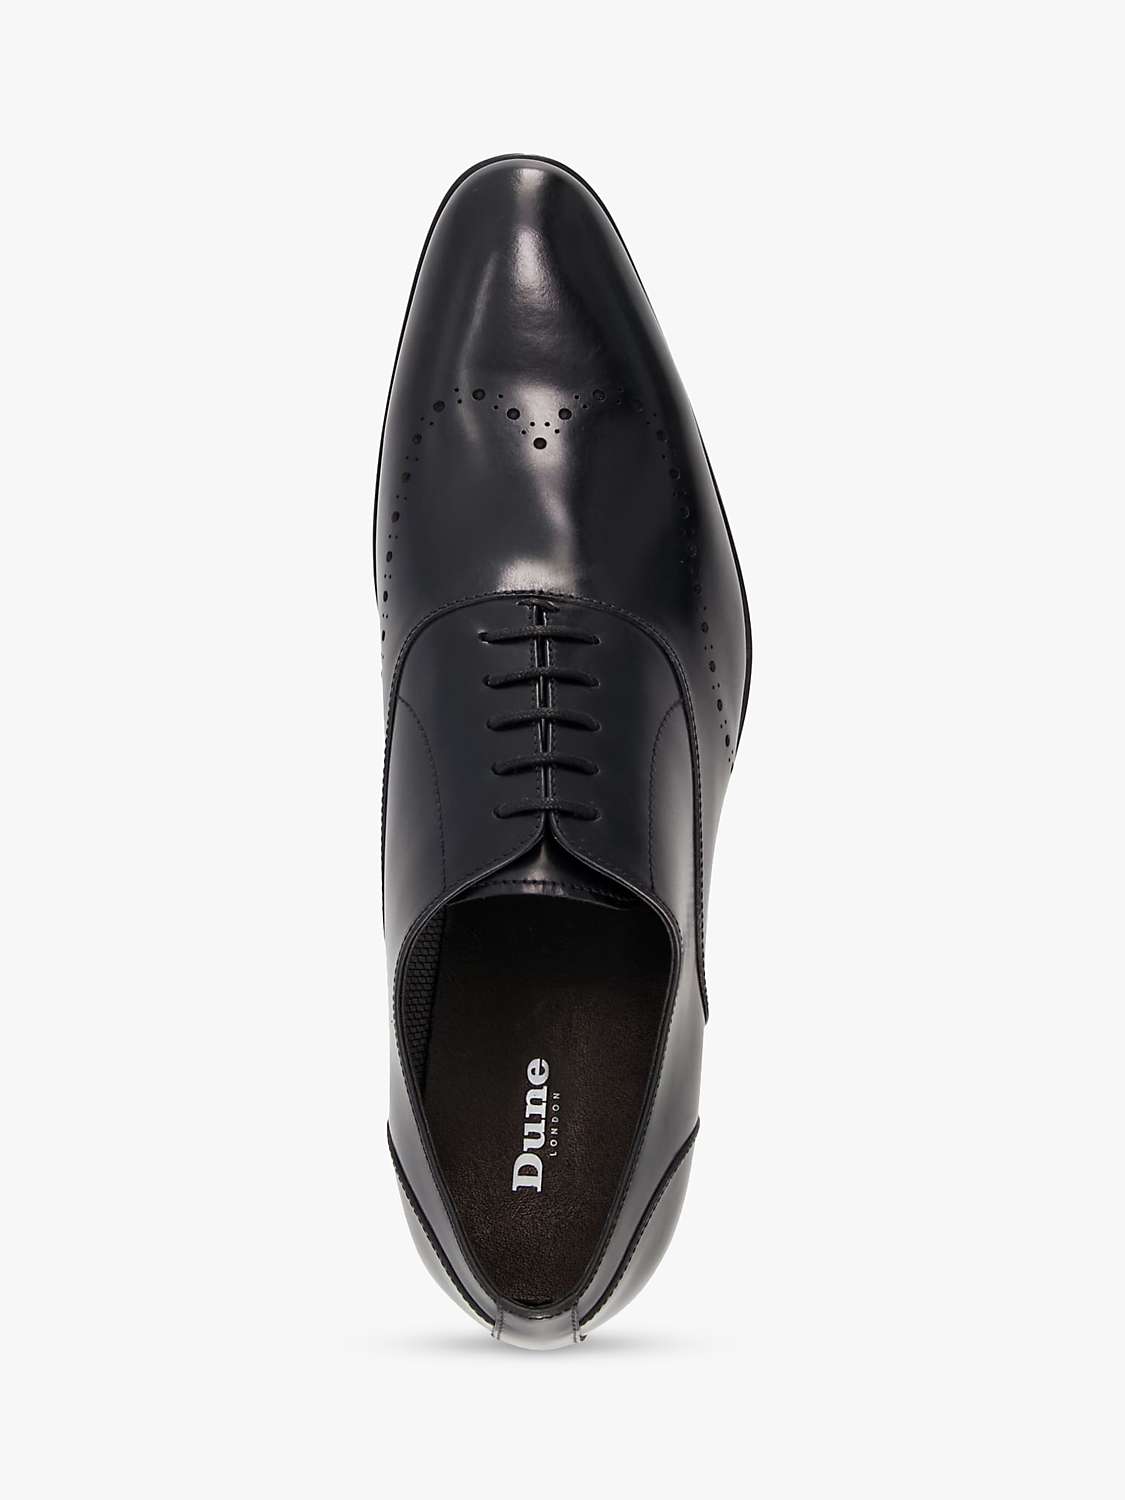 Dune Syconn Leather Brogue Shoes, Black at John Lewis & Partners